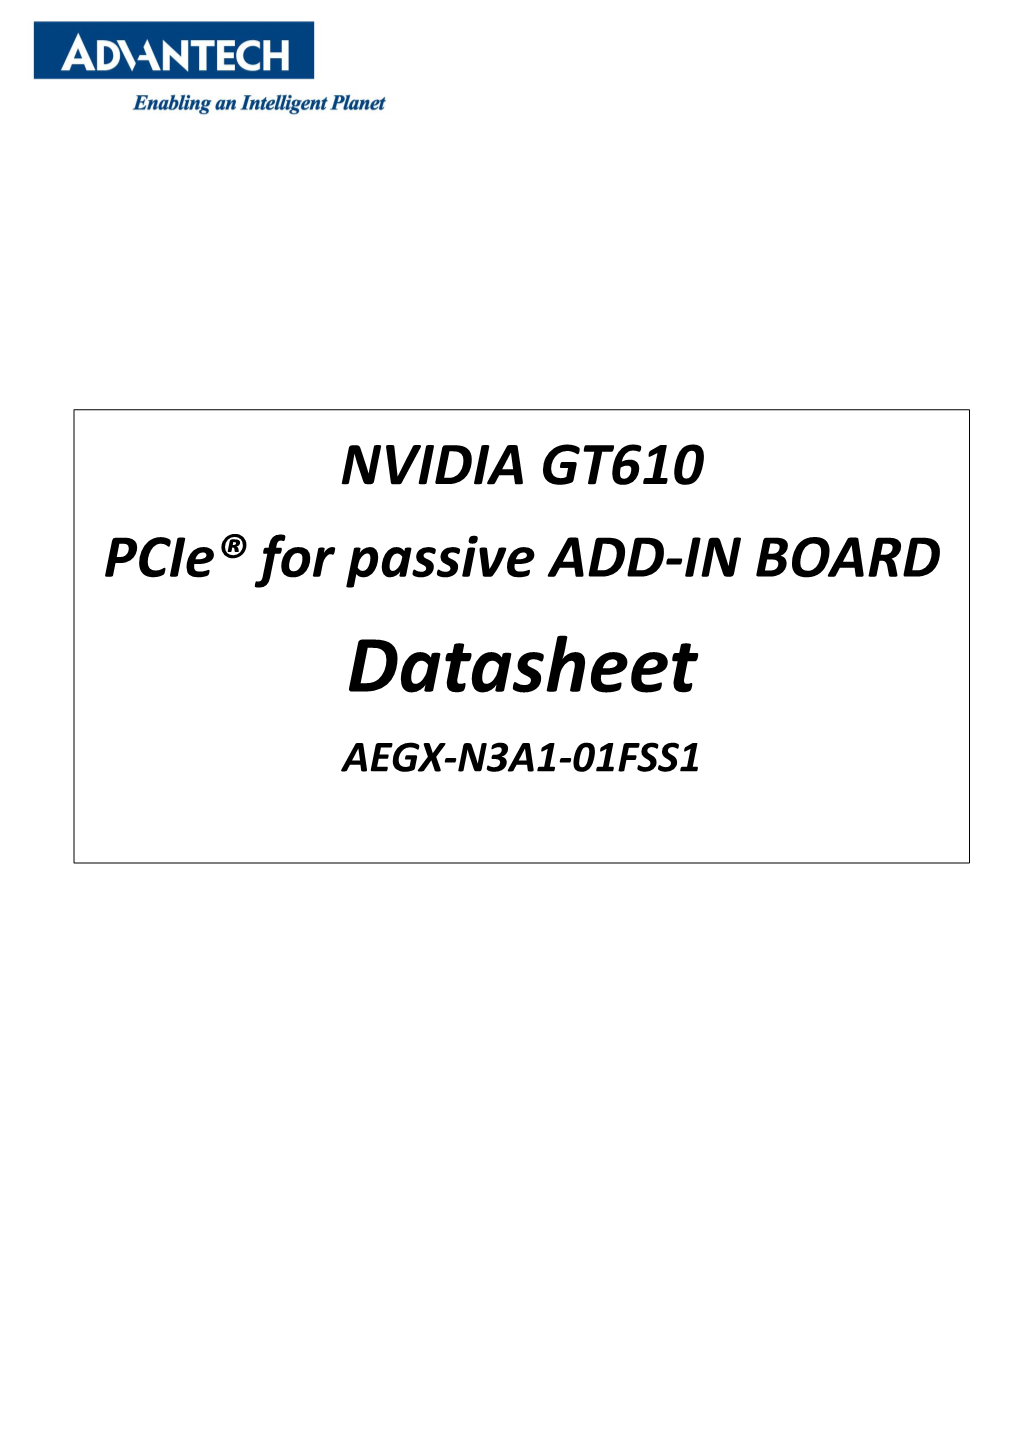 AMD Pcie® ADD-IN BOARD